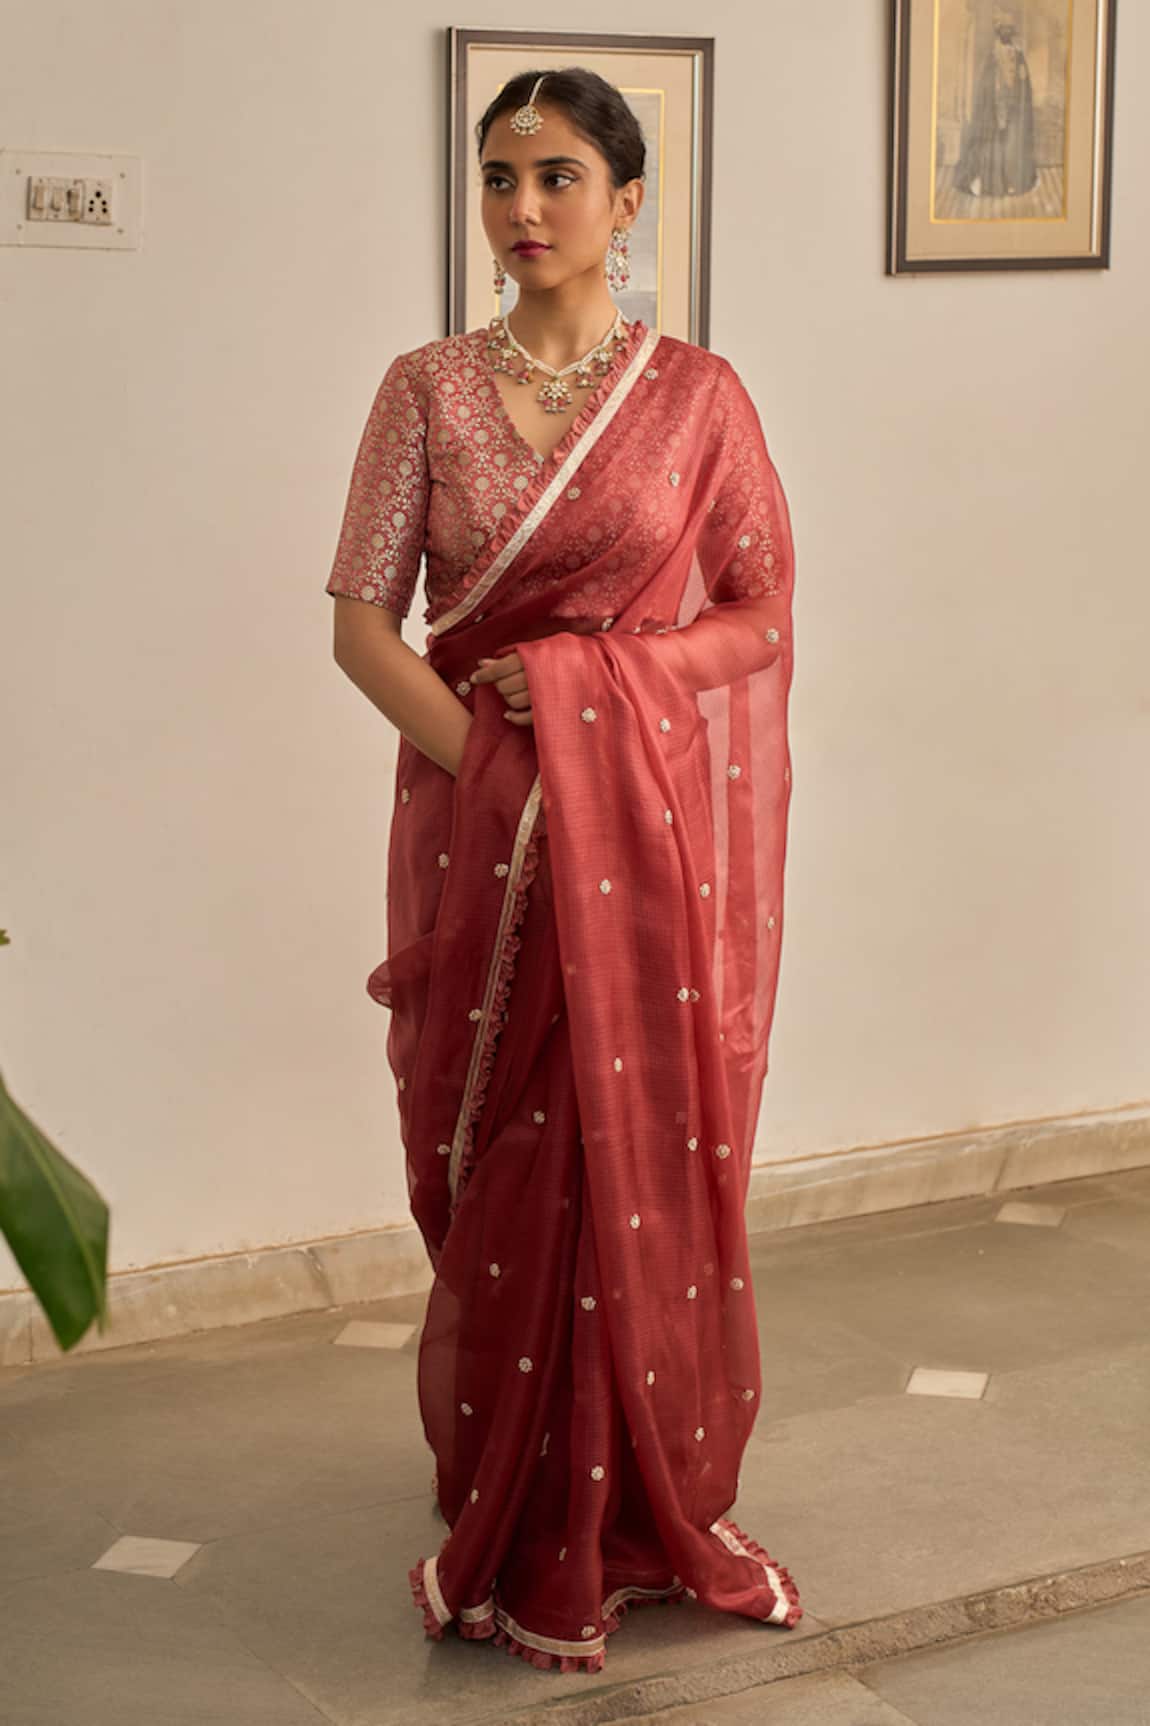 Apeksha Jain Label Sabha Marori Embroidered Saree With Blouse